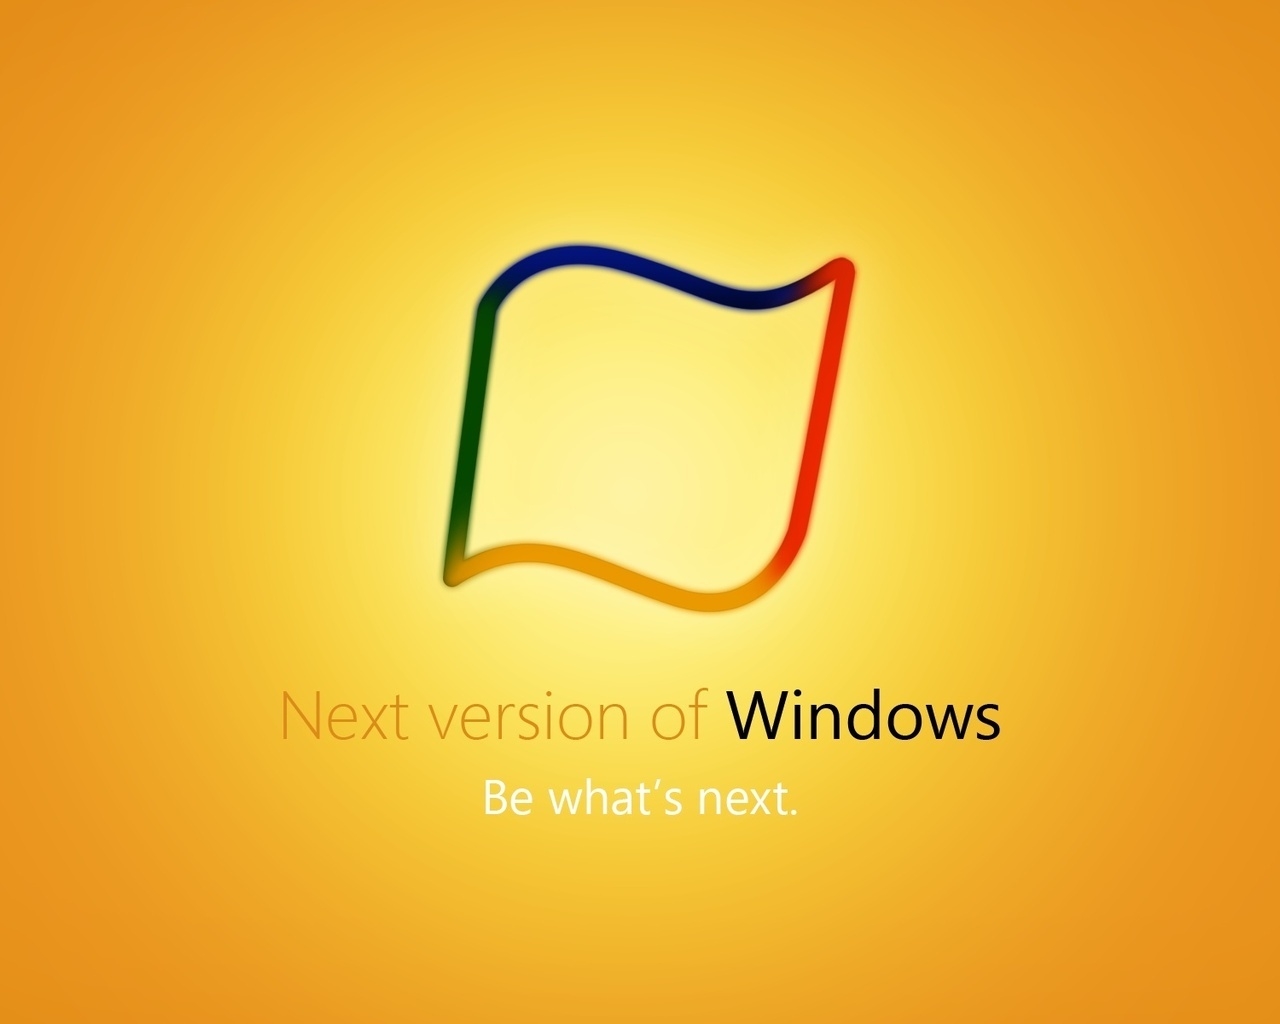 Next Windows 8 for 1280 x 1024 resolution